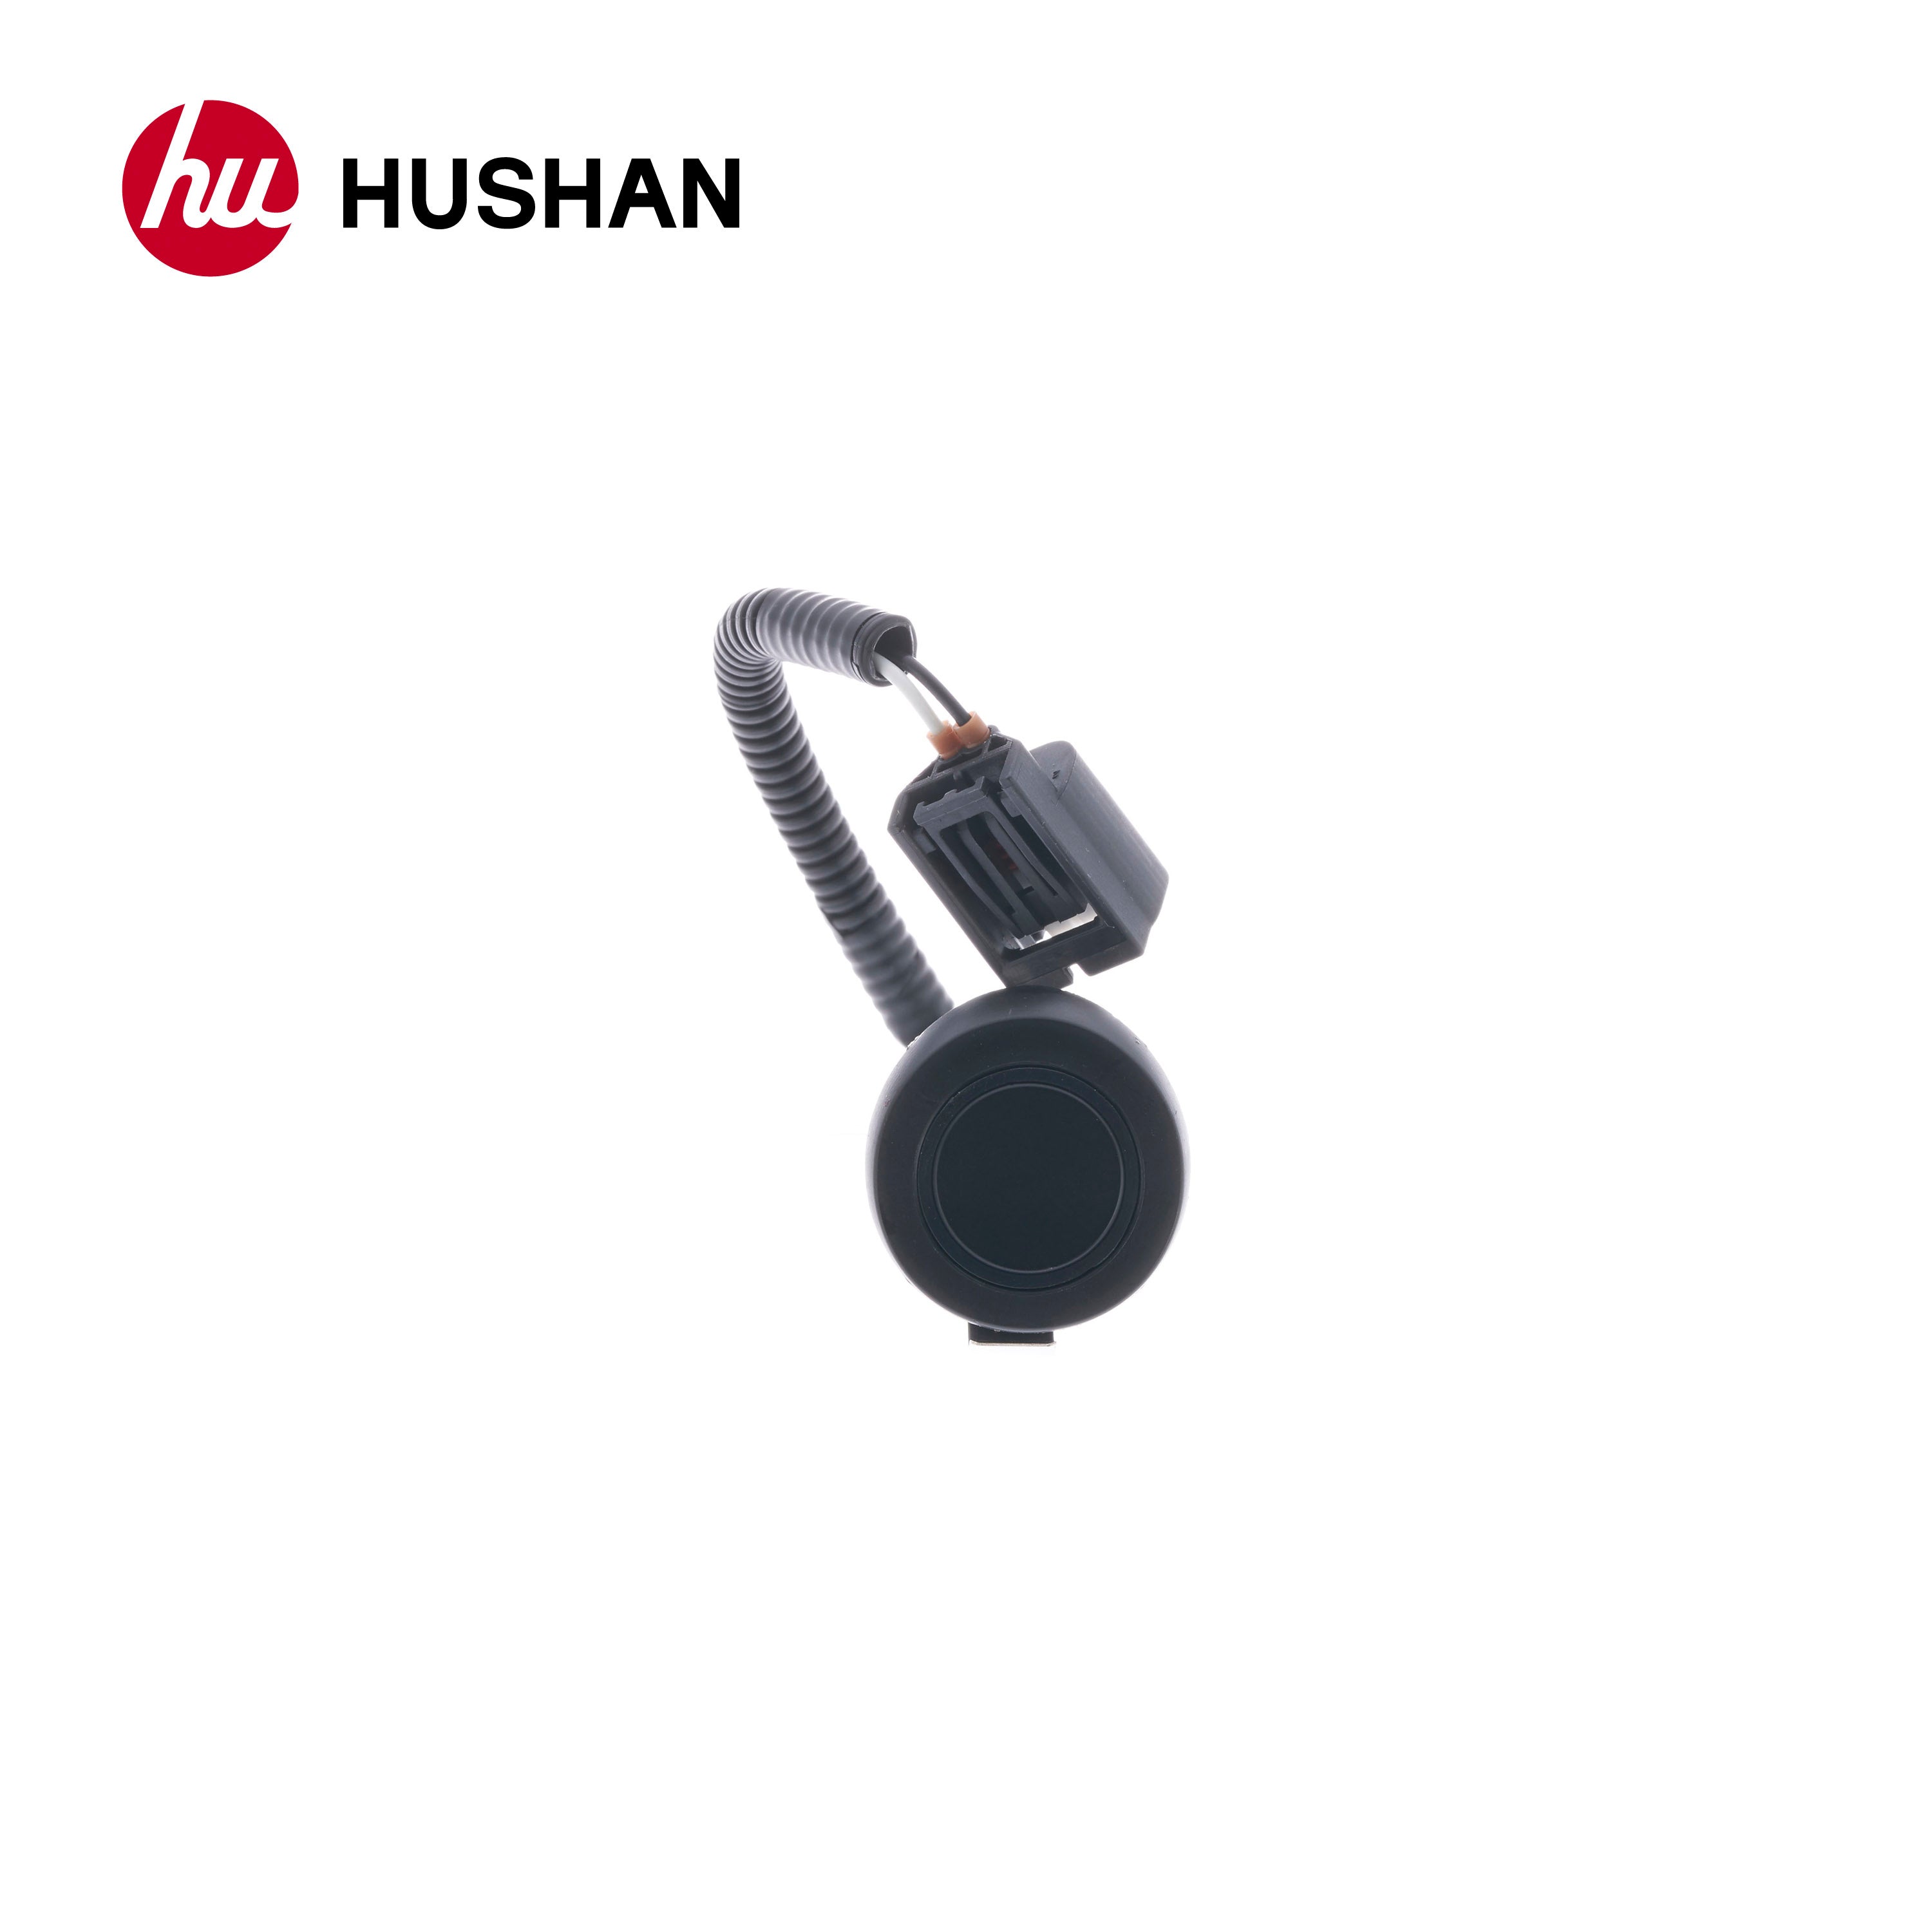 HU-HDR009-OE